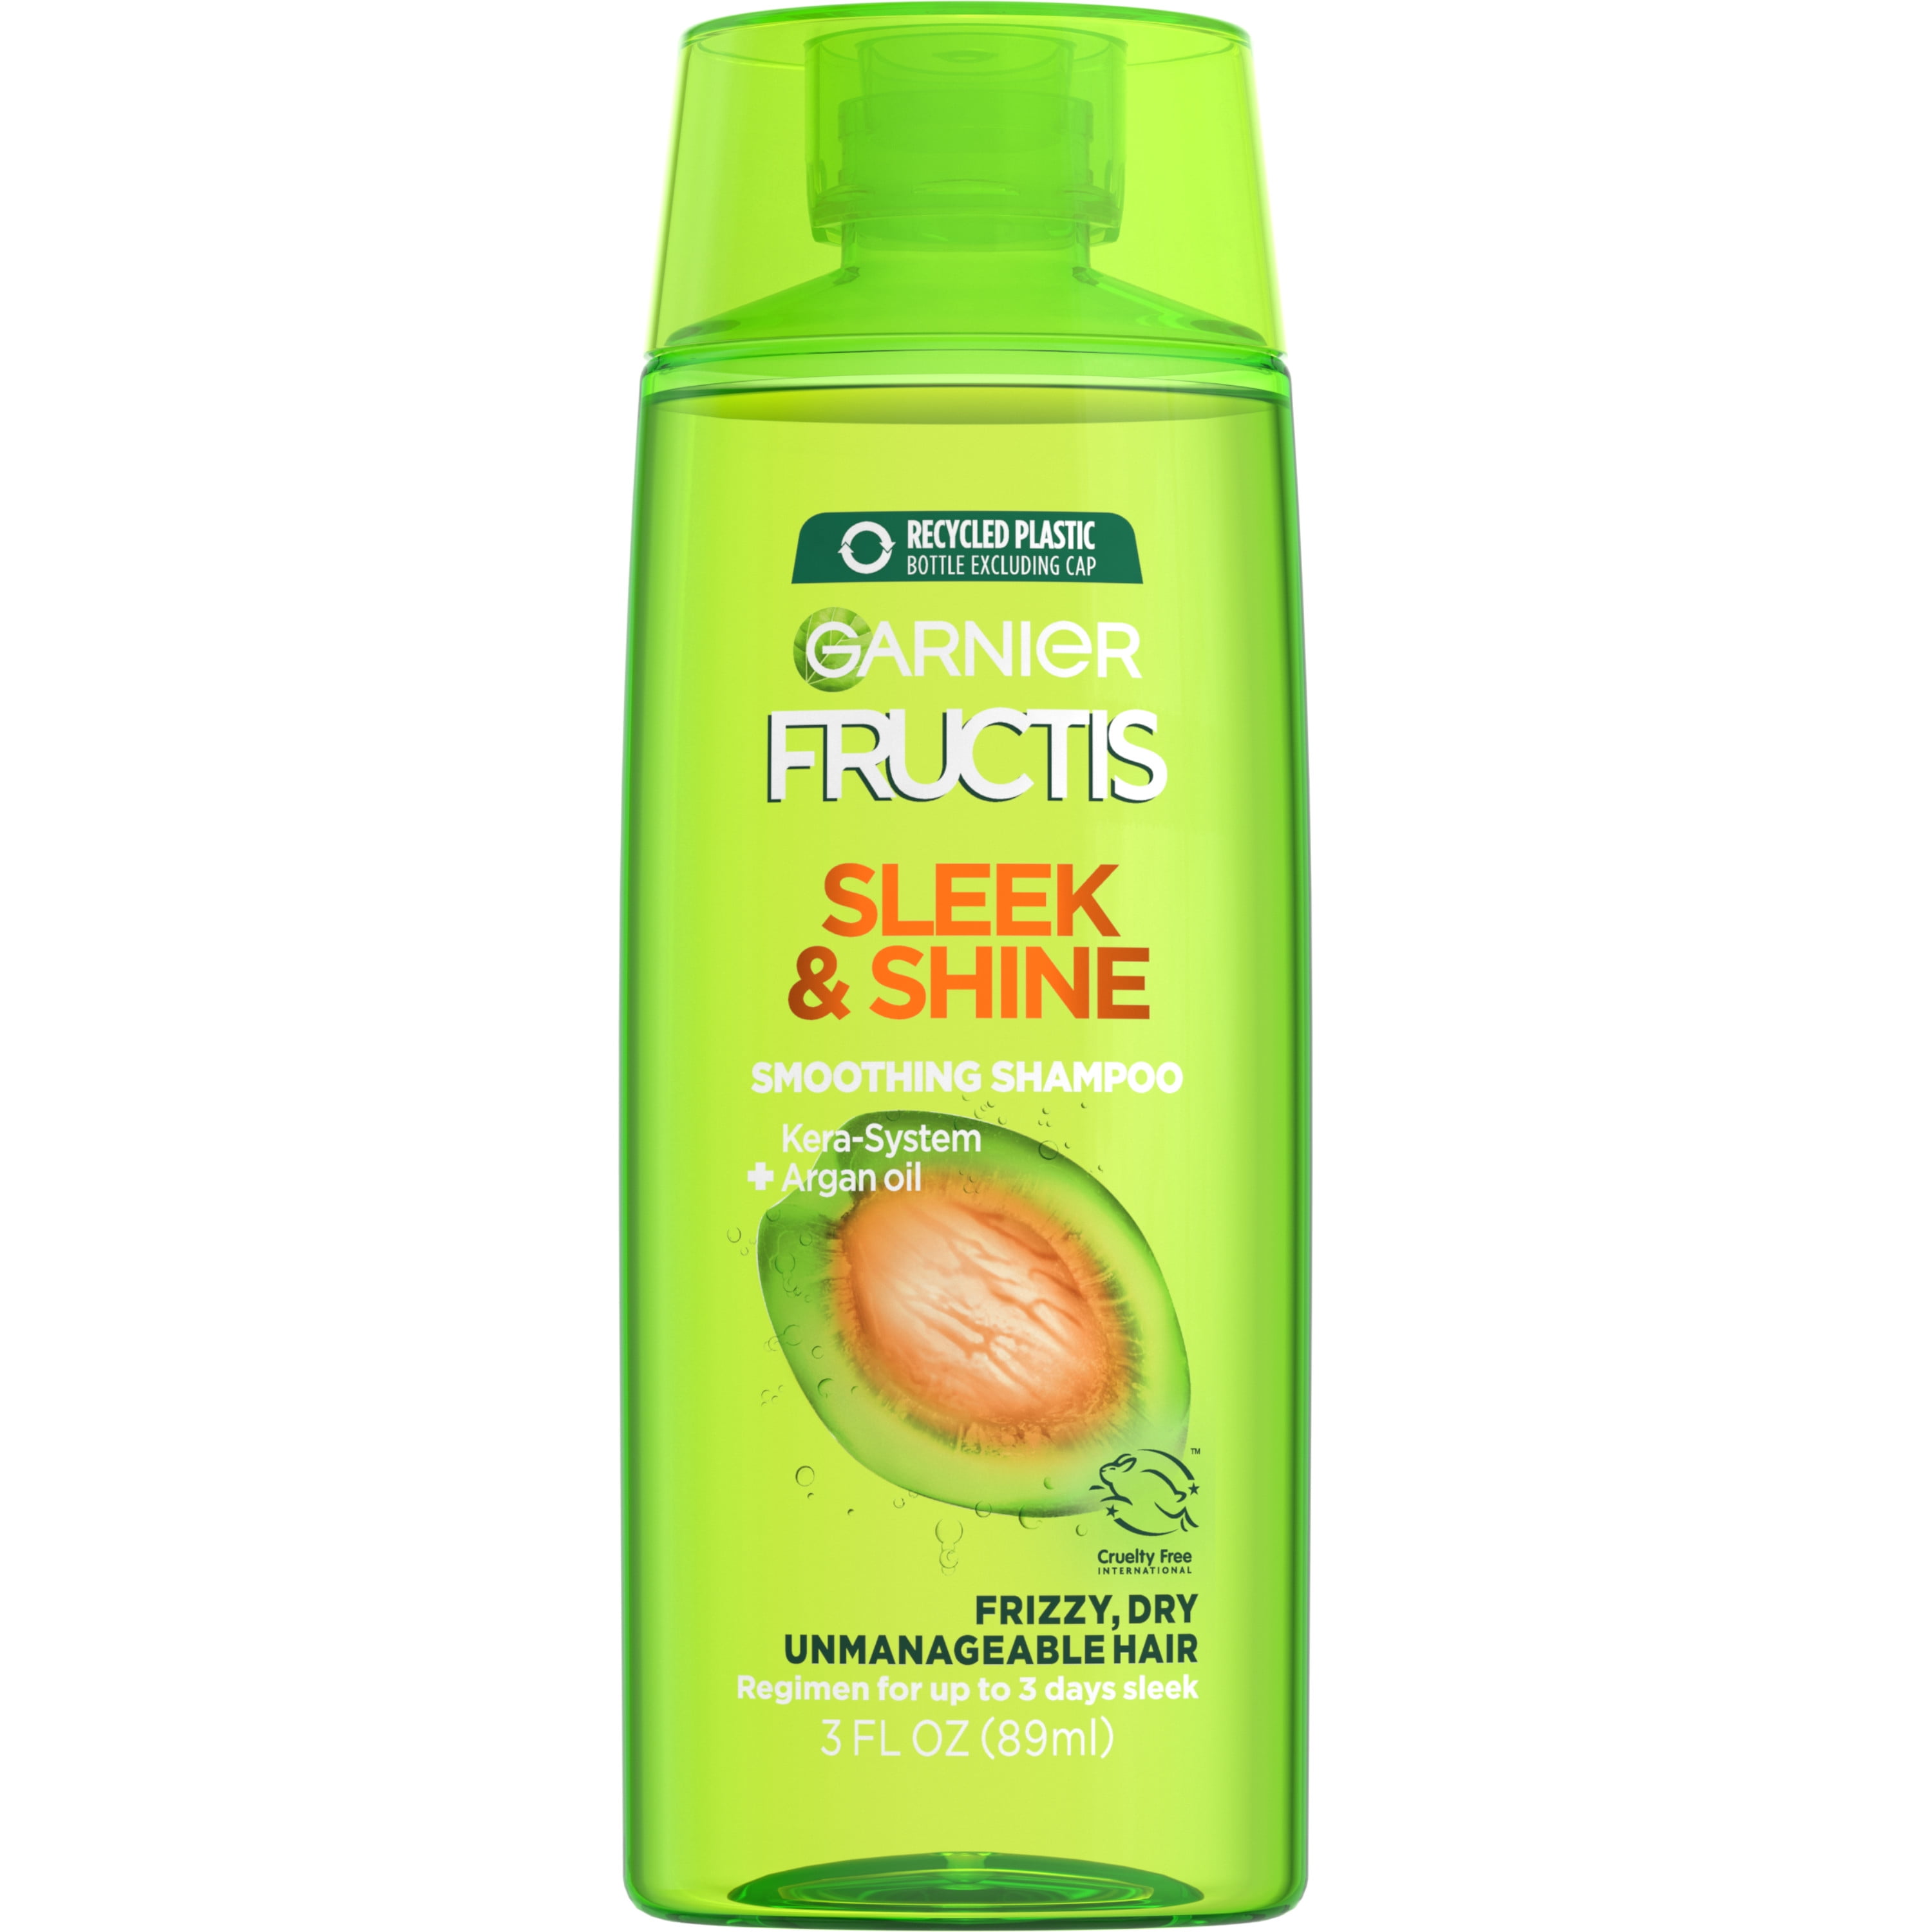 Garnier Fructis Sleek & Shine Smoothing Shampoo for Frizzy, Dry Hair, 3 fl oz